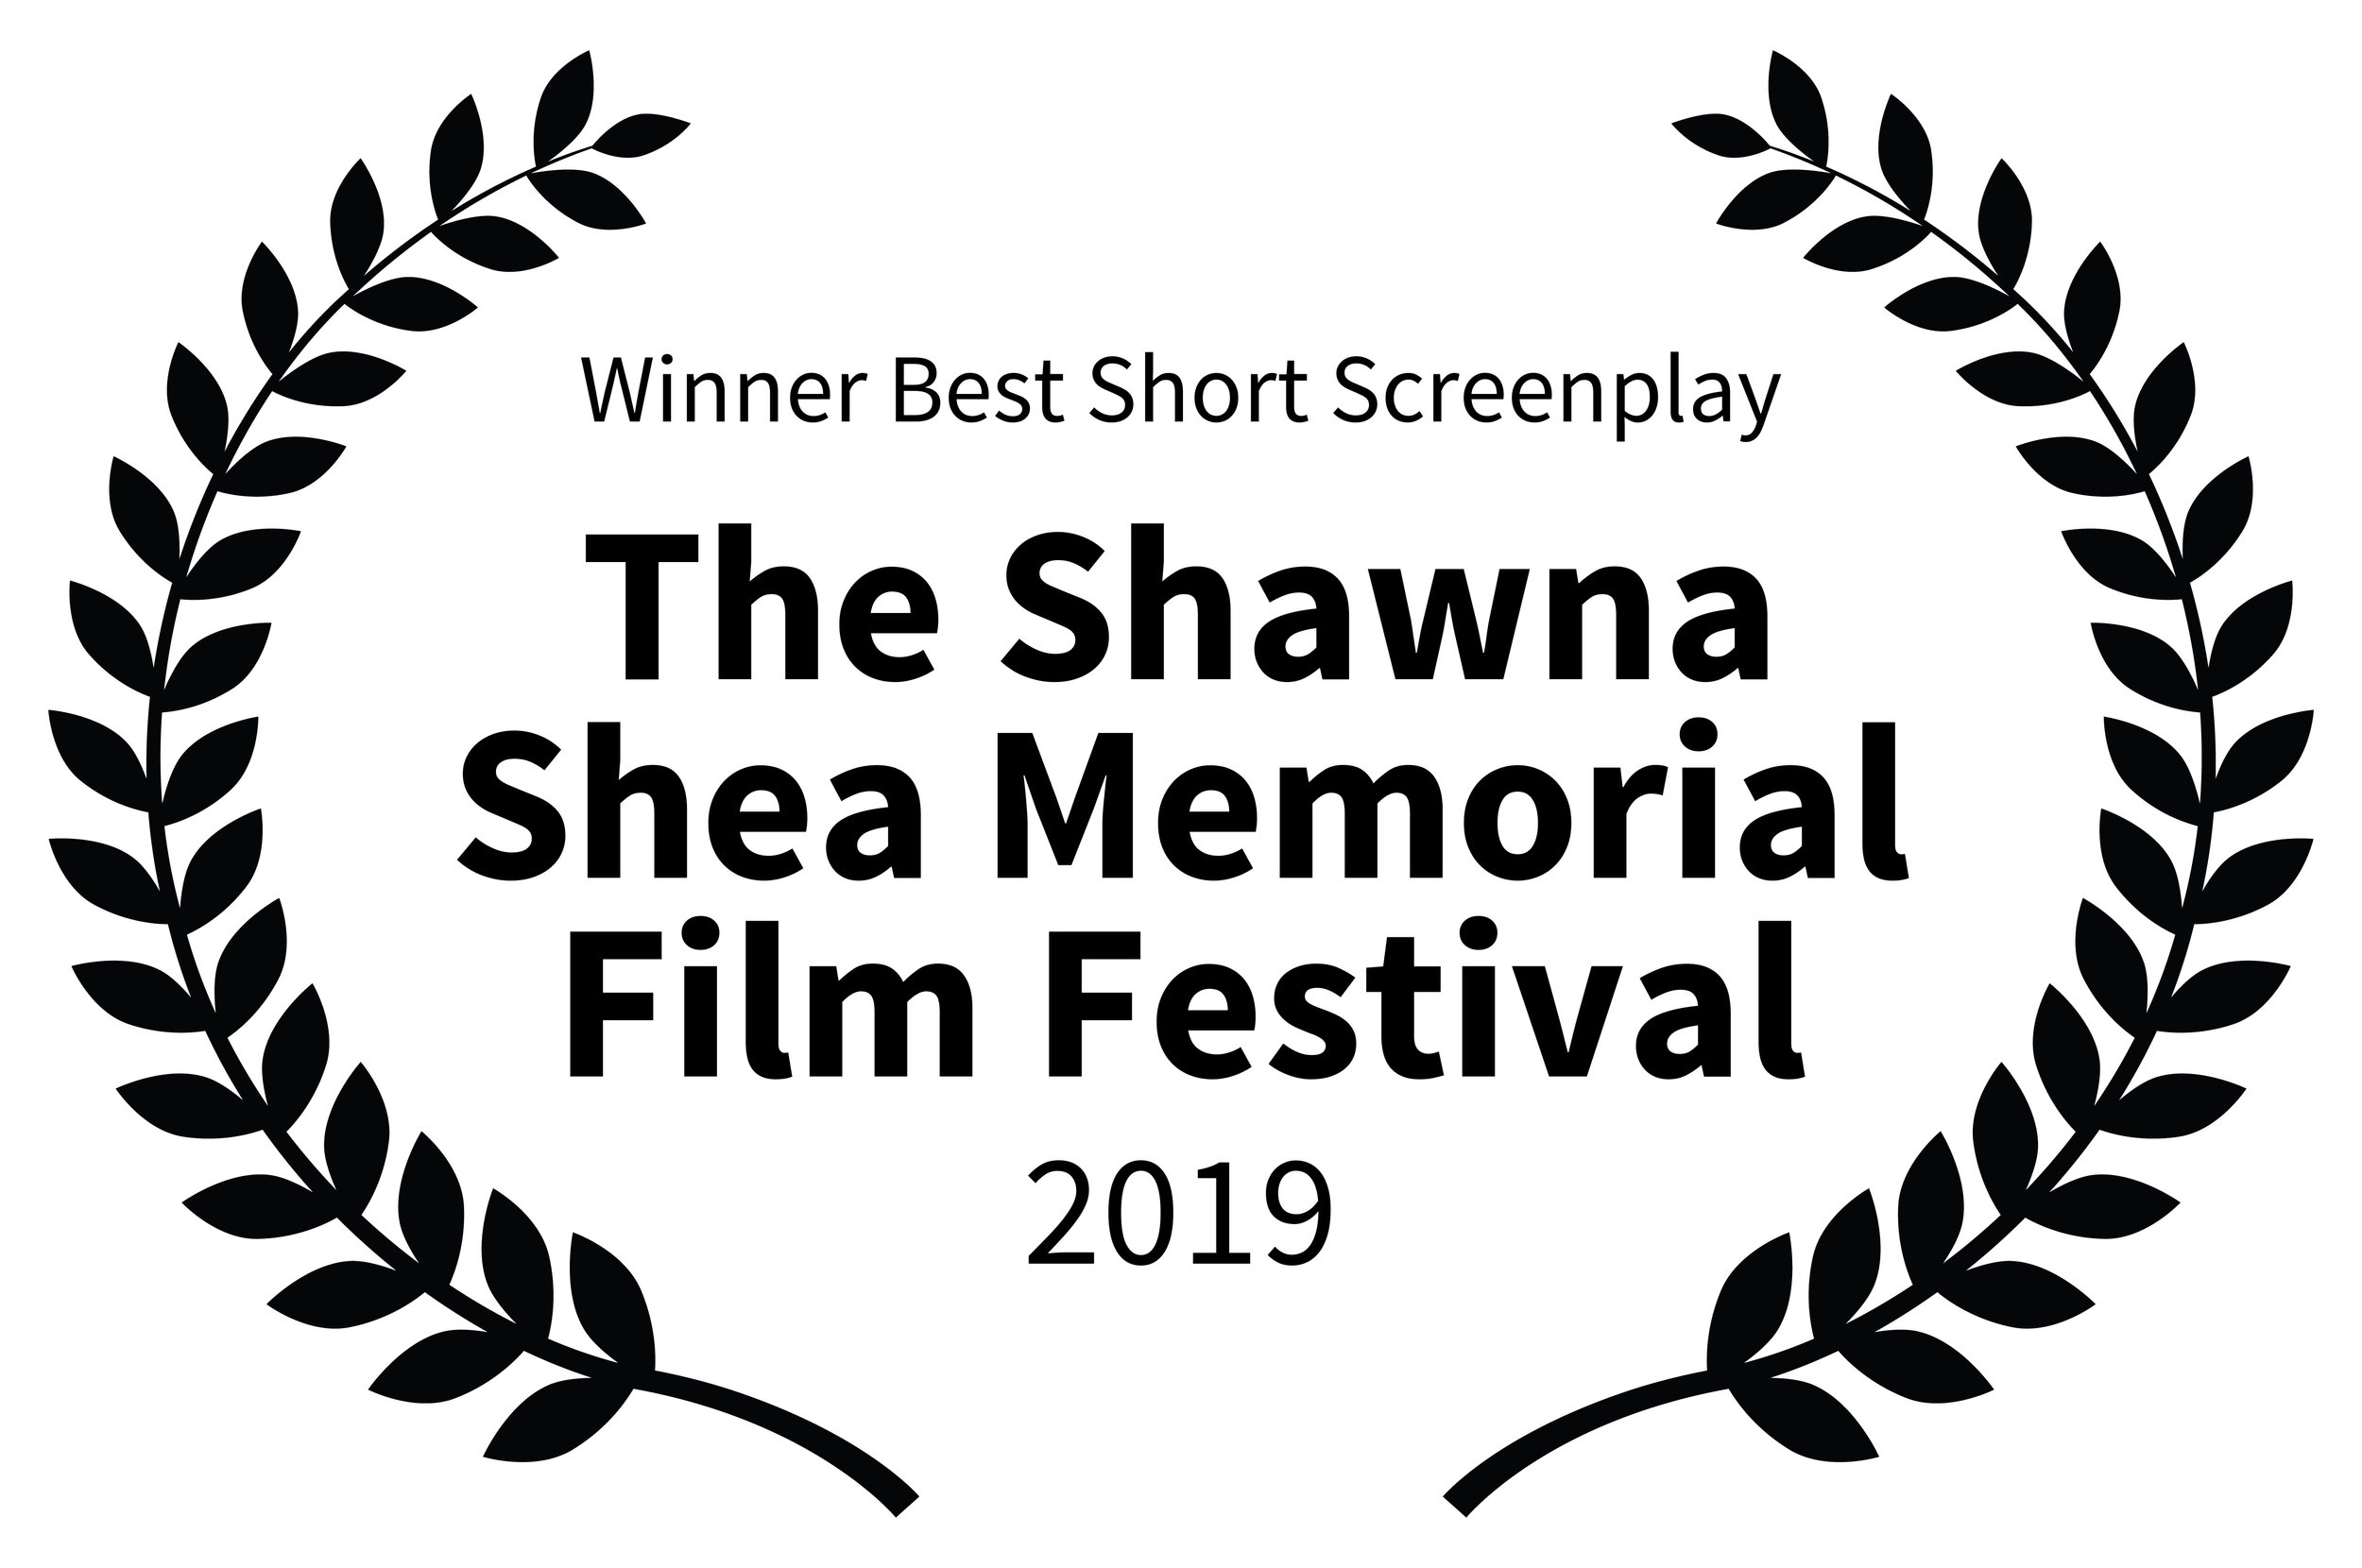 WinnerBestShortScreenplay-TheShawnaSheaMemorialFilmFestival-2019.jpg